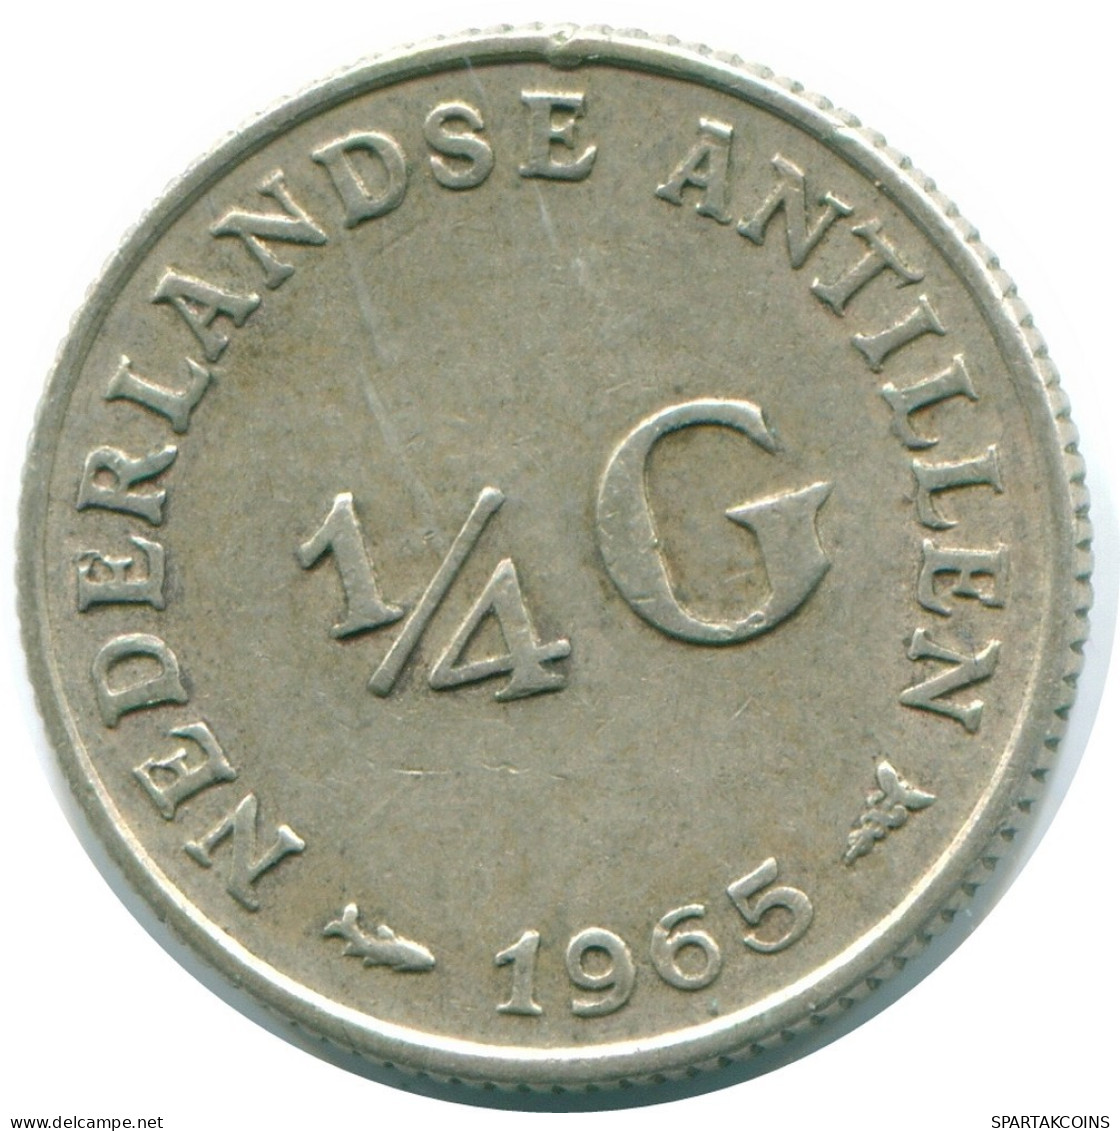 1/4 GULDEN 1965 NIEDERLÄNDISCHE ANTILLEN SILBER Koloniale Münze #NL11281.4.D.A - Netherlands Antilles